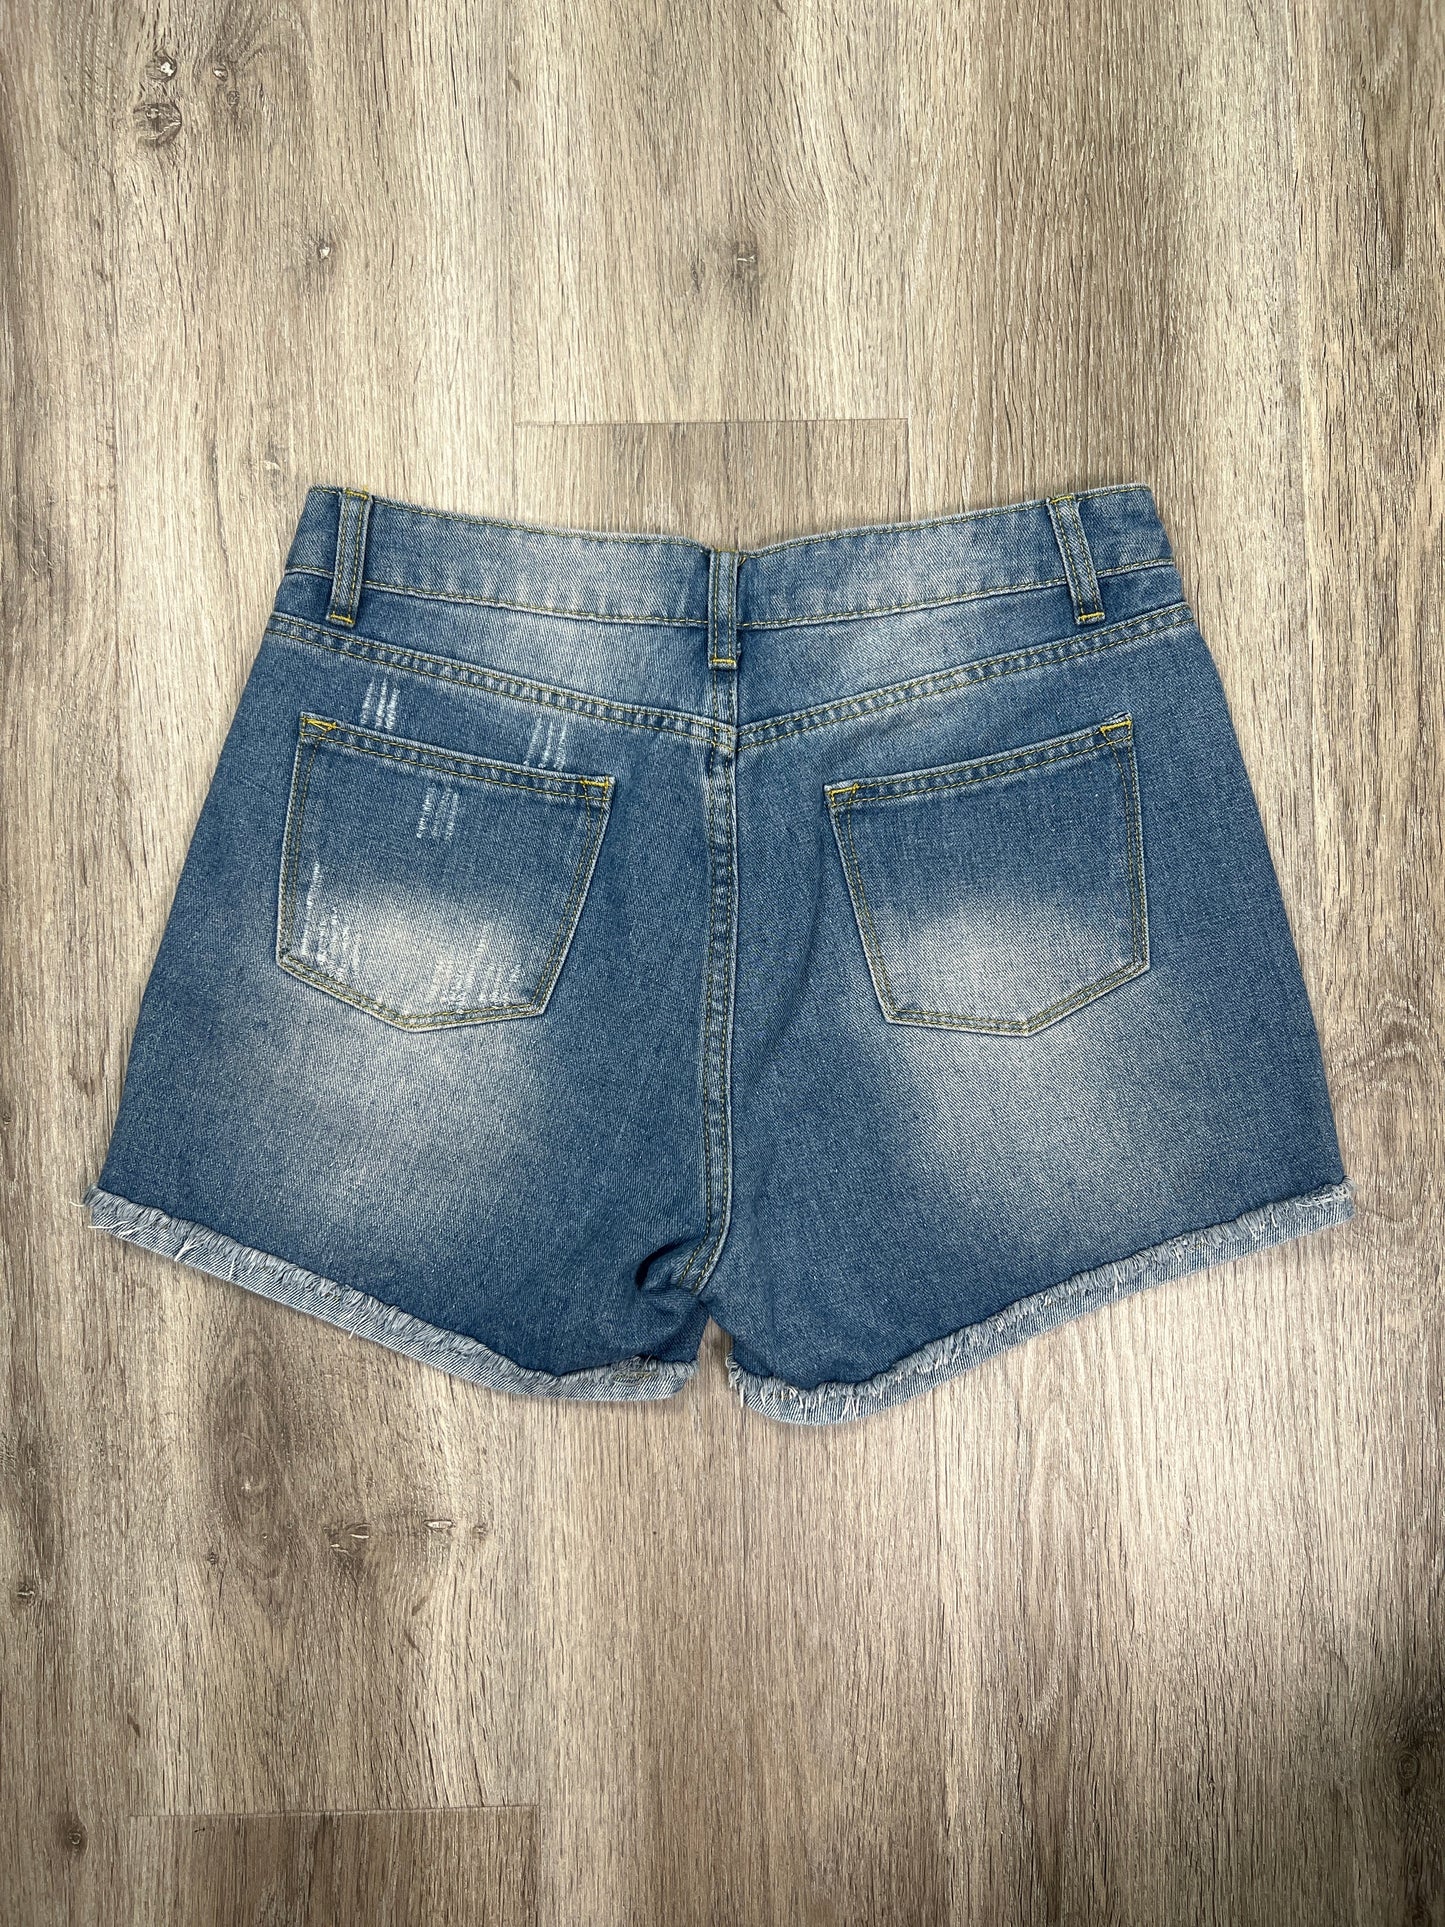 Blue Denim Shorts Cmc, Size M